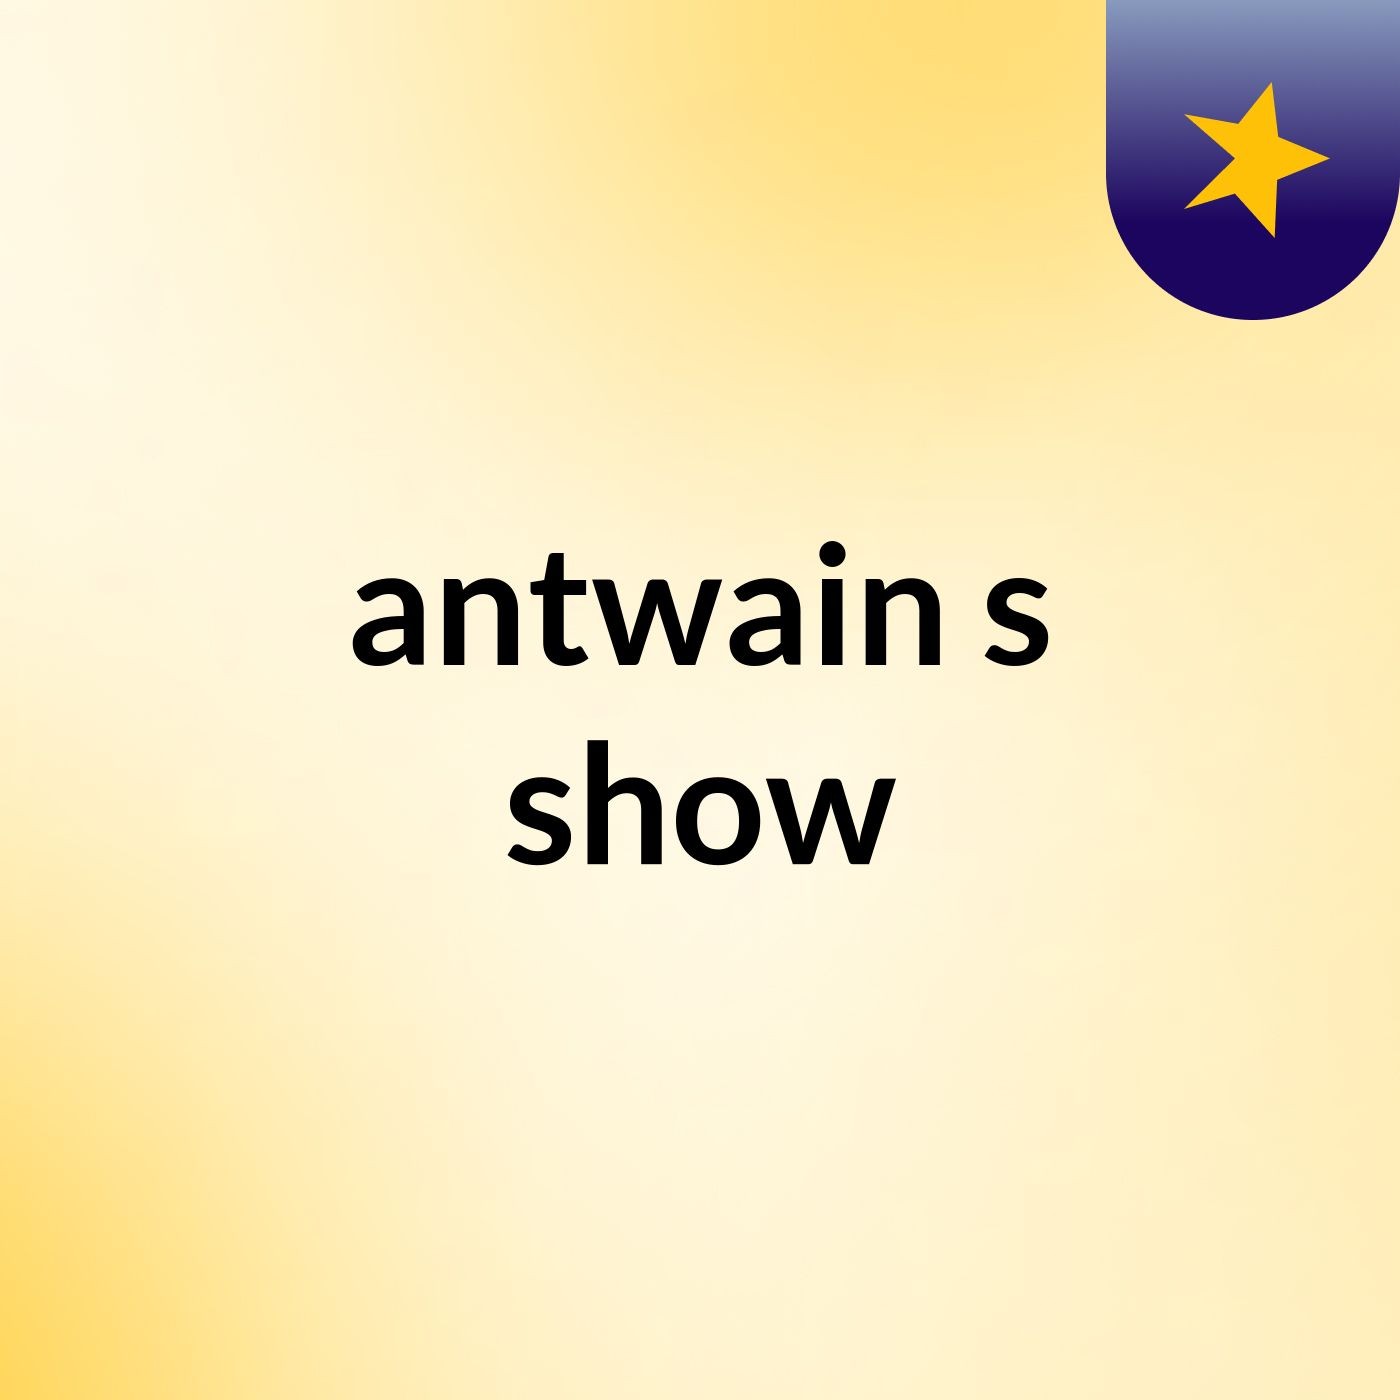 antwain's show